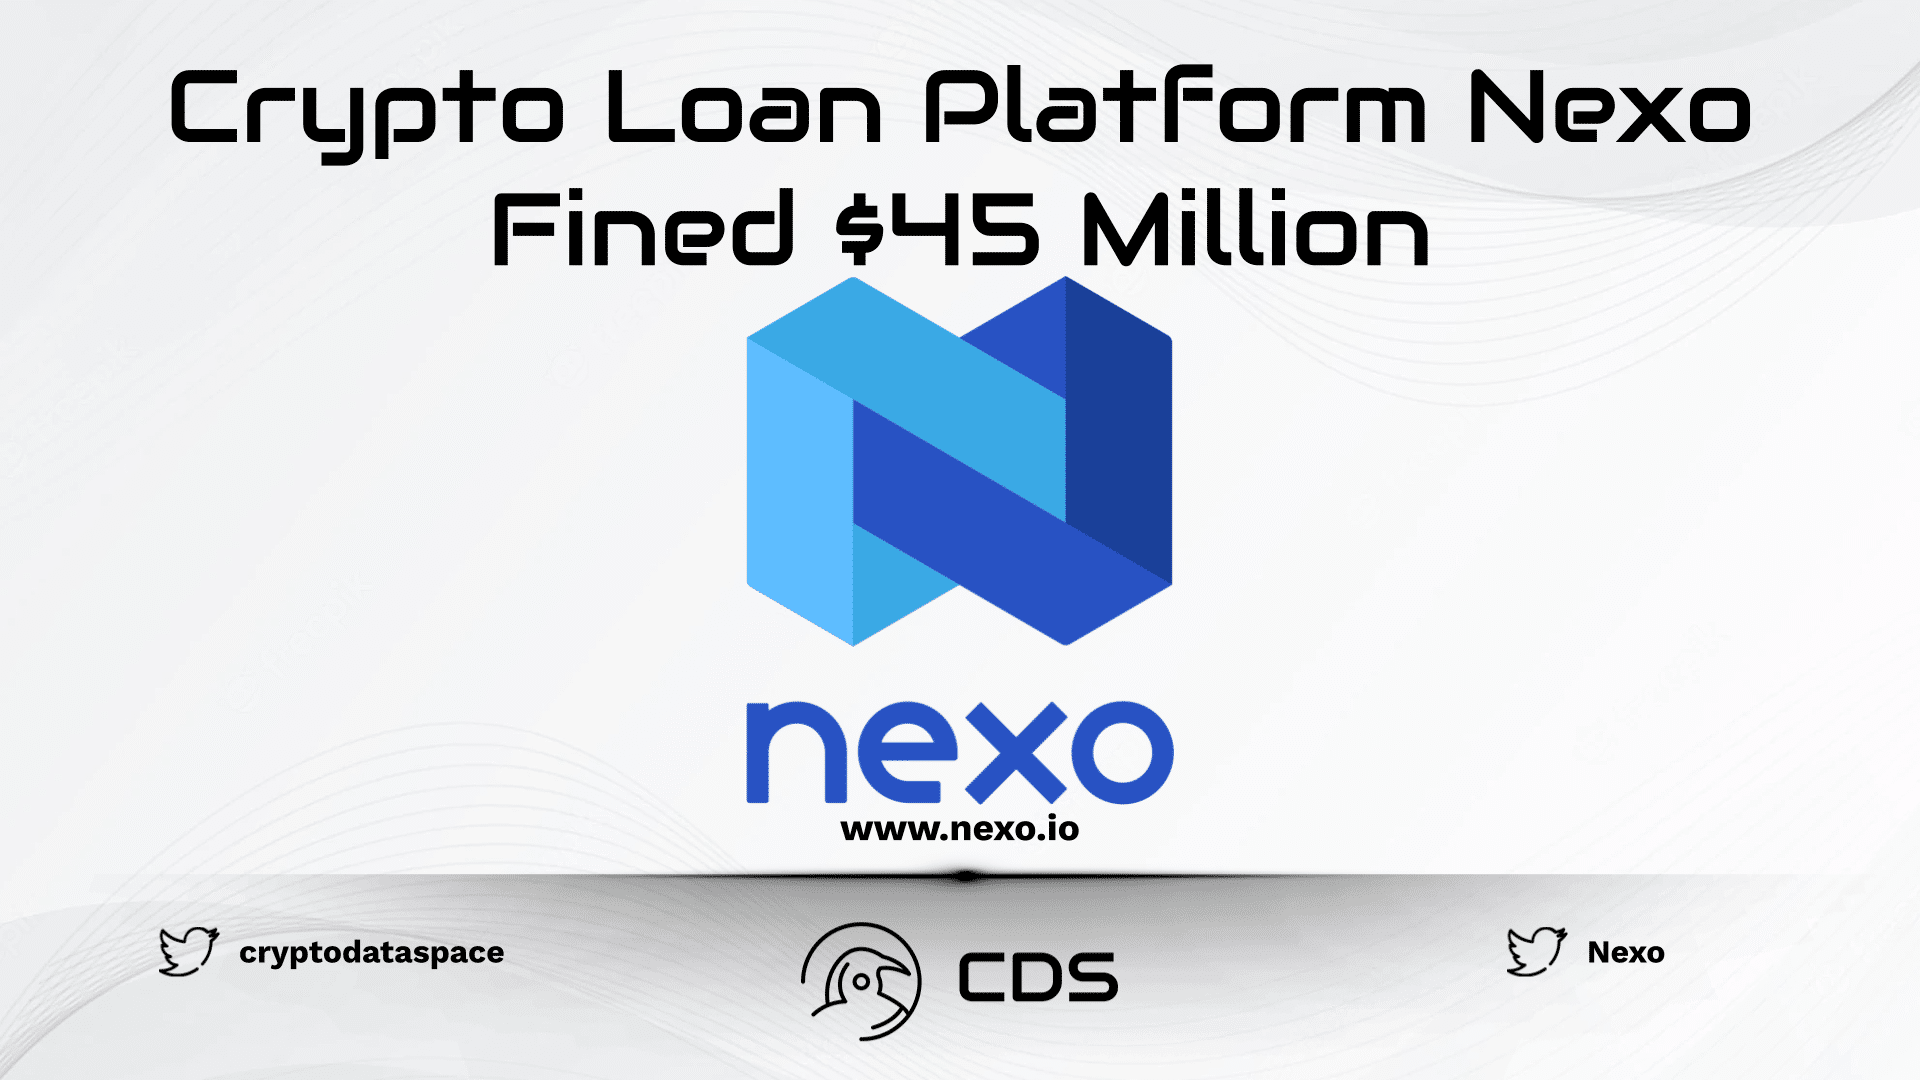 Nexo (2Crypto Loan Platform Nexo Fined $45 Million!